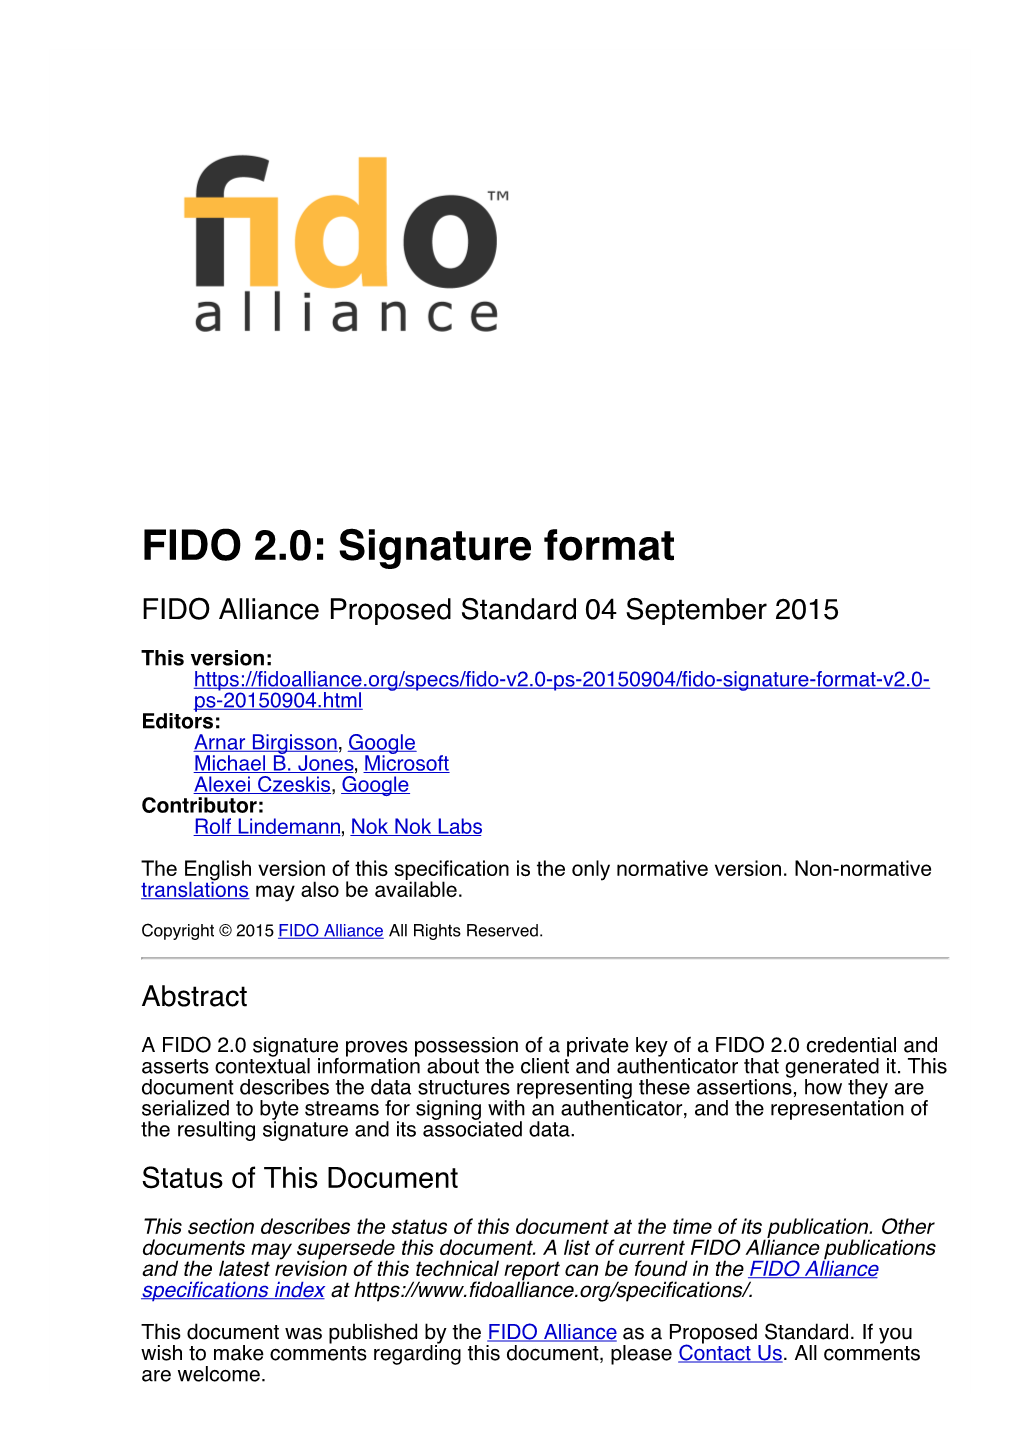 Signature Format FIDO Alliance Proposed Standard 04 September 2015